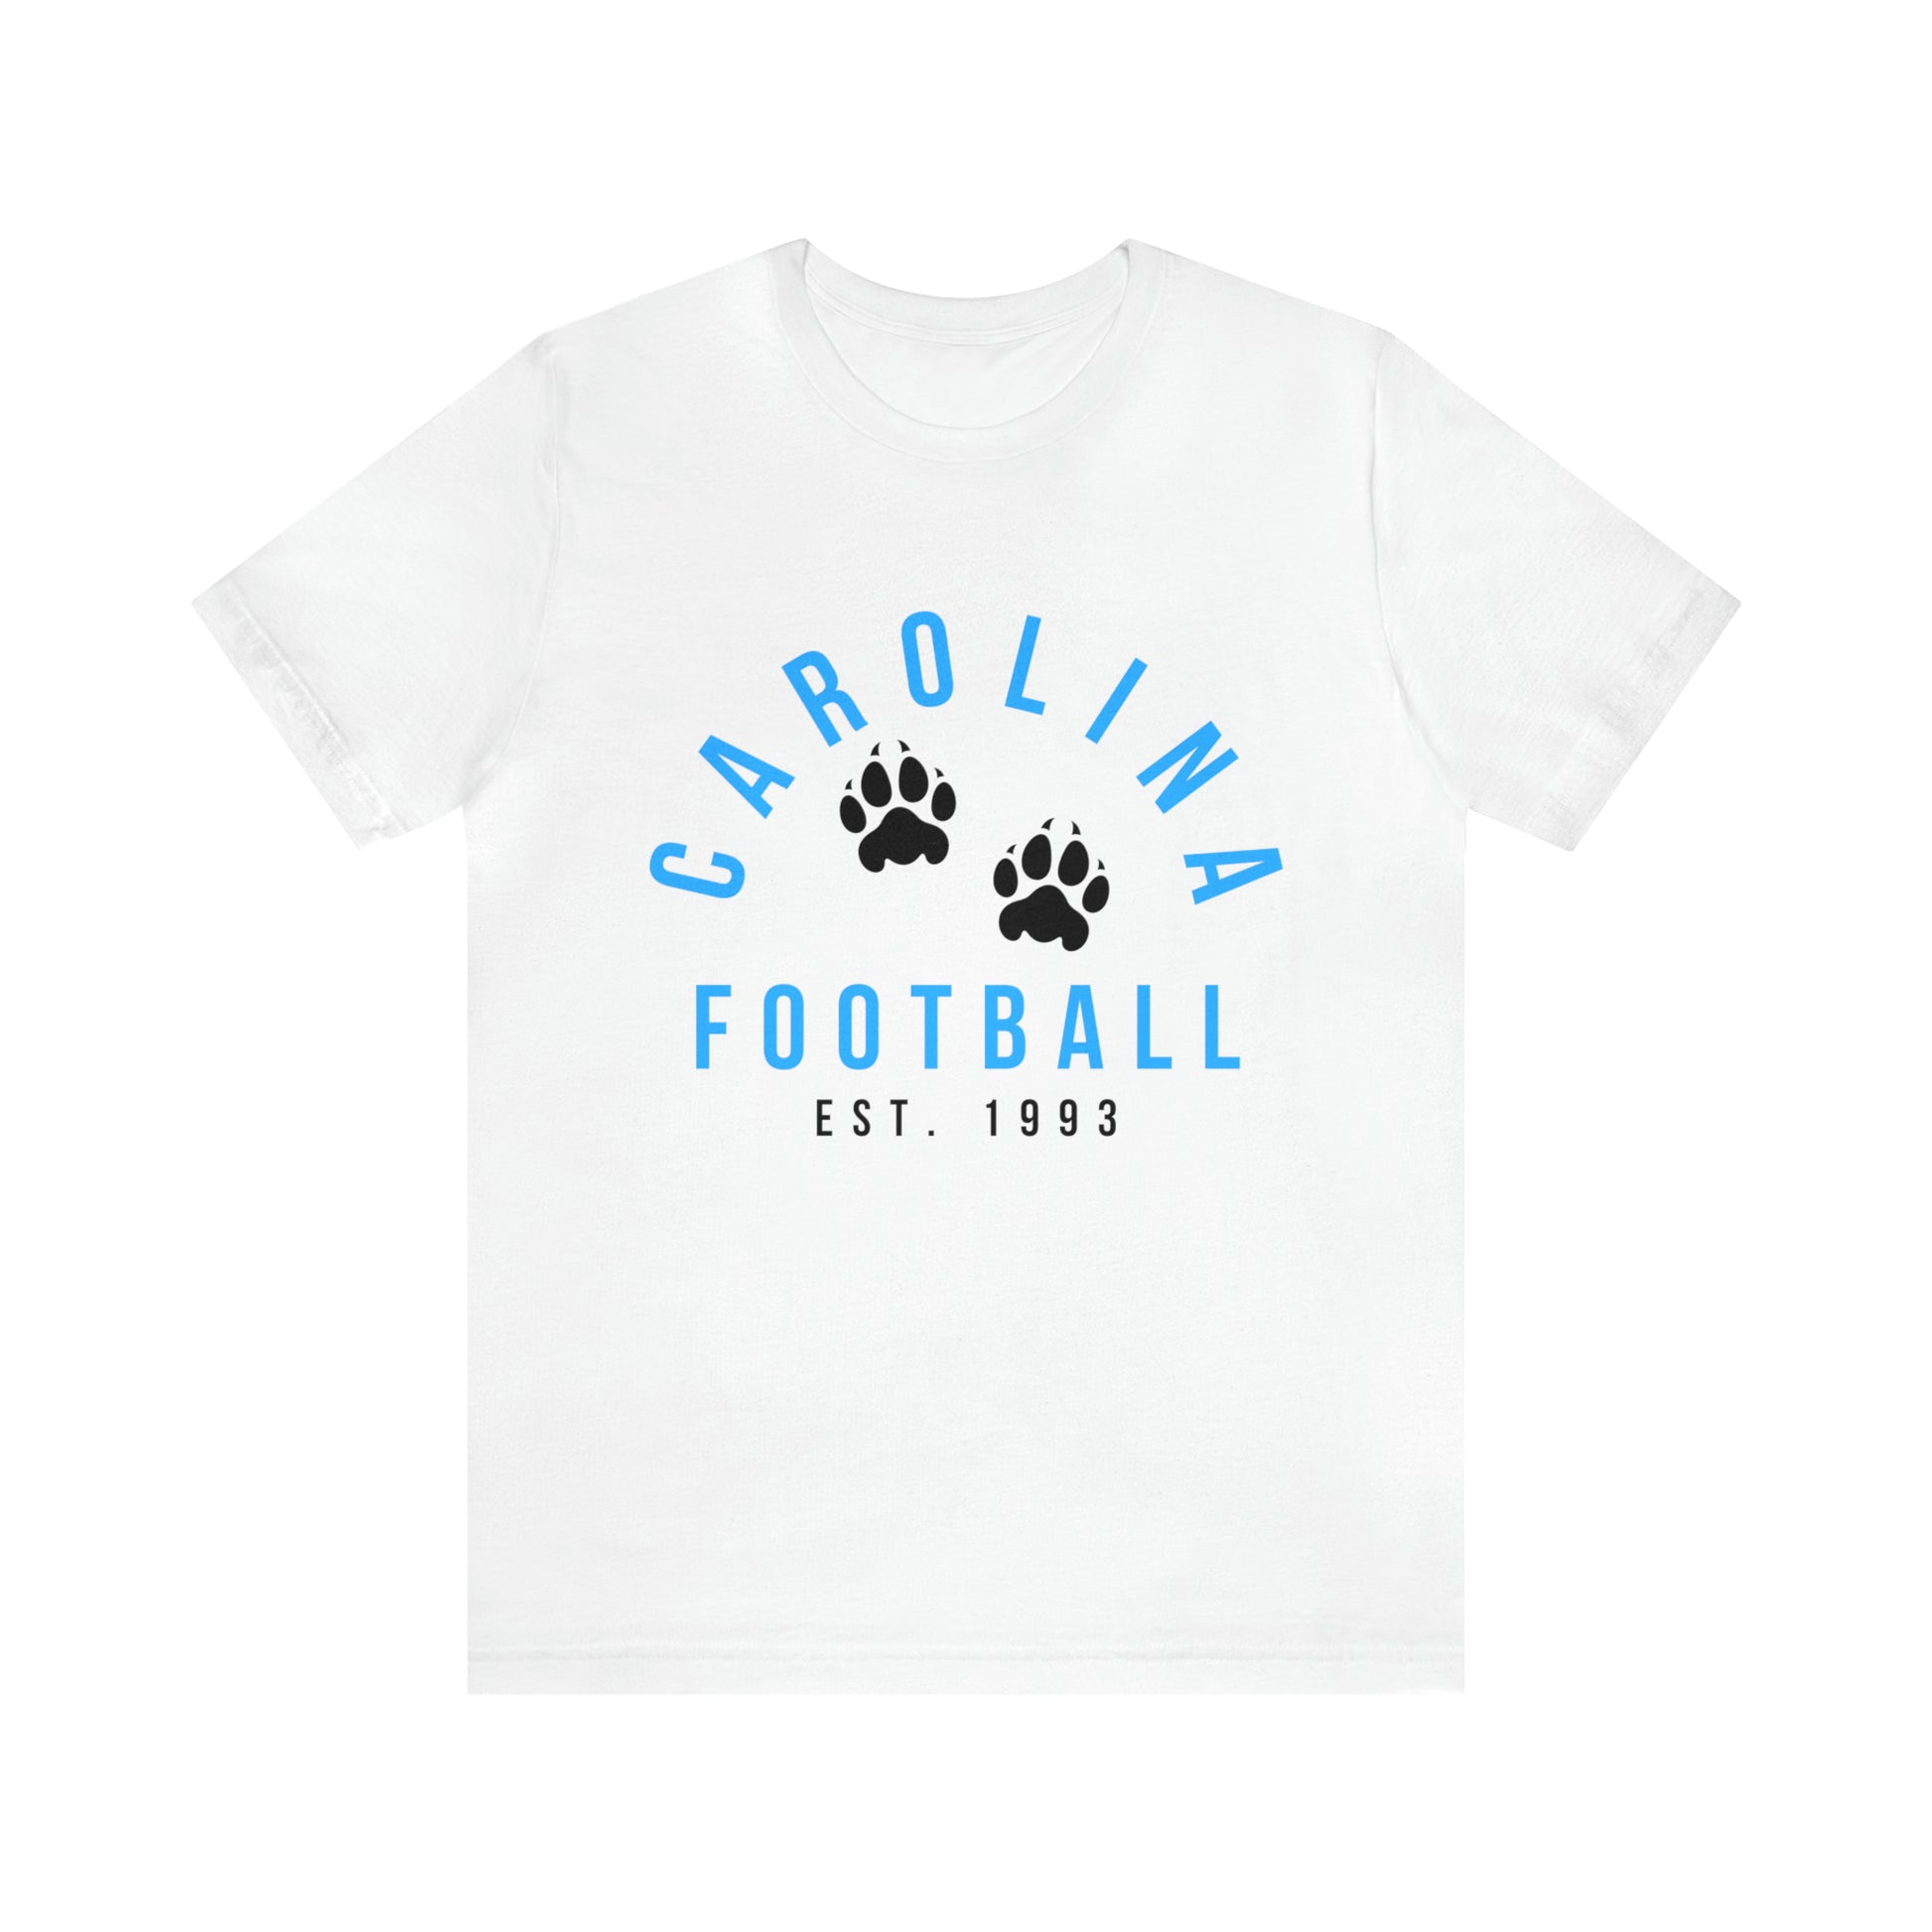 Vintage Carolina Panthers T-Shirt - Retro Short Sleeve Tee NFL Football Oversized Apparel - Vintage Men's and Women's - Design 4 White